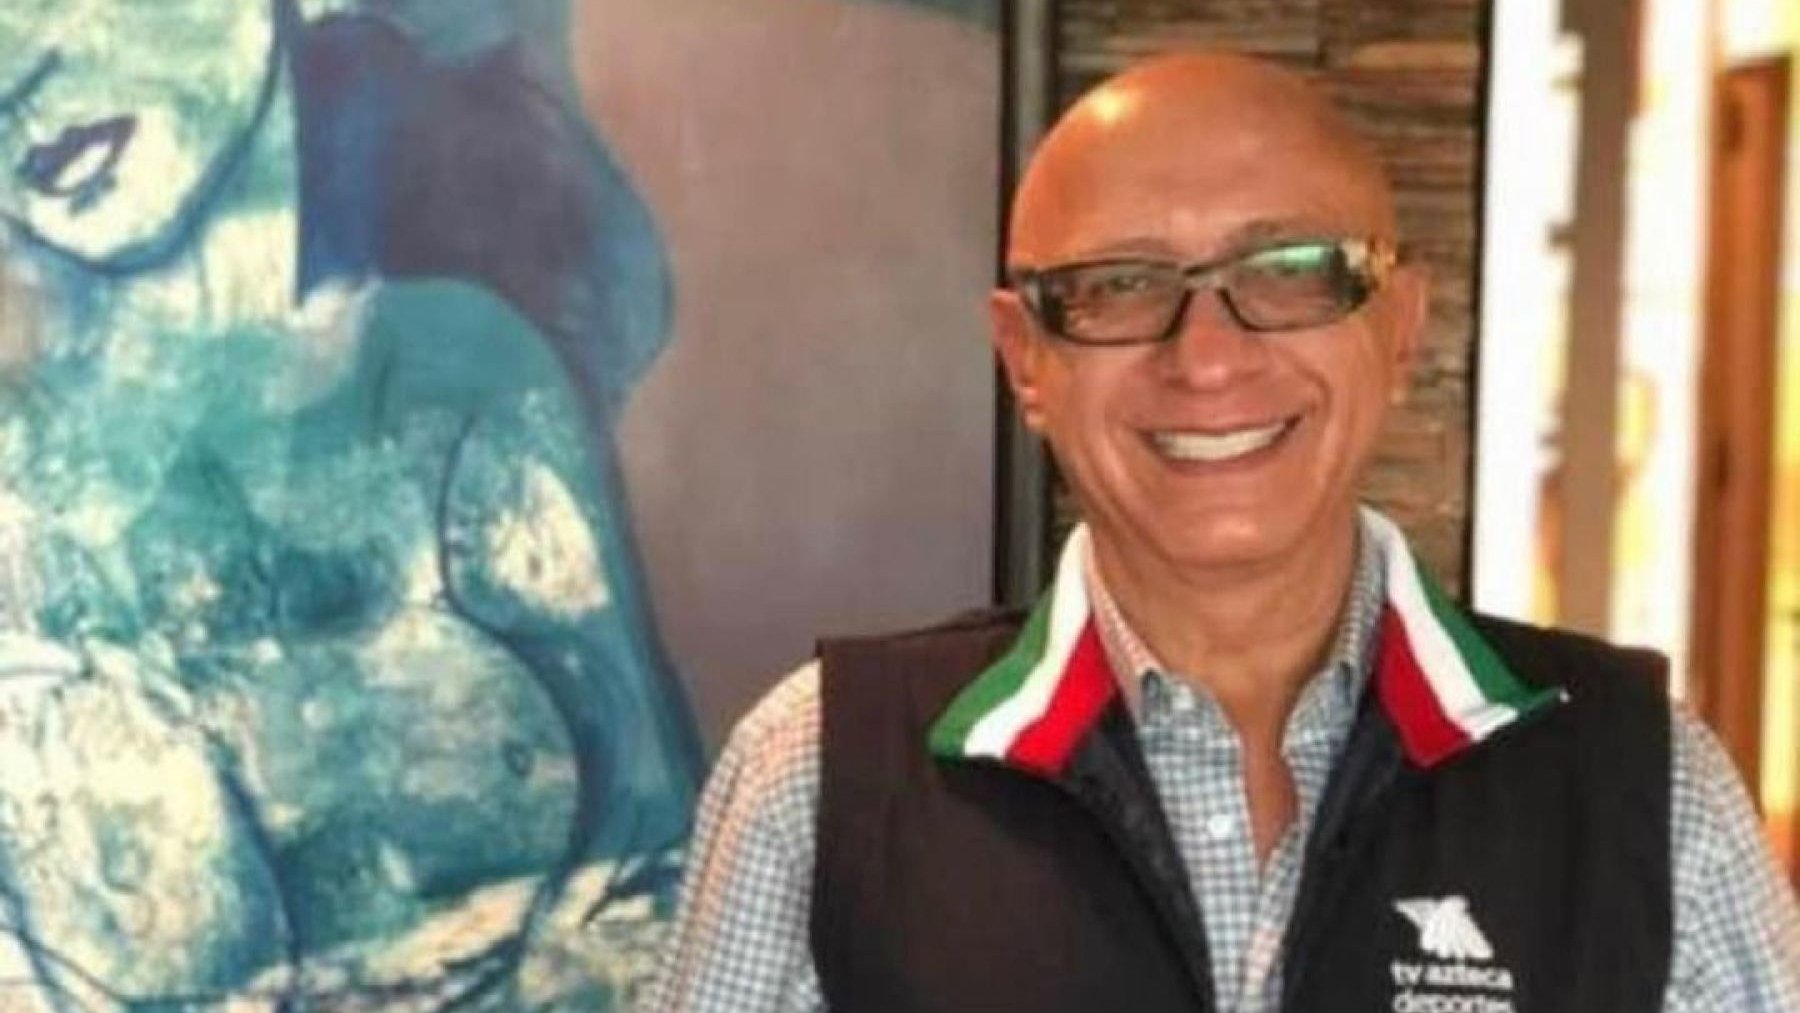 TV Azteca executive Alberto Siurana Covit-19 dies